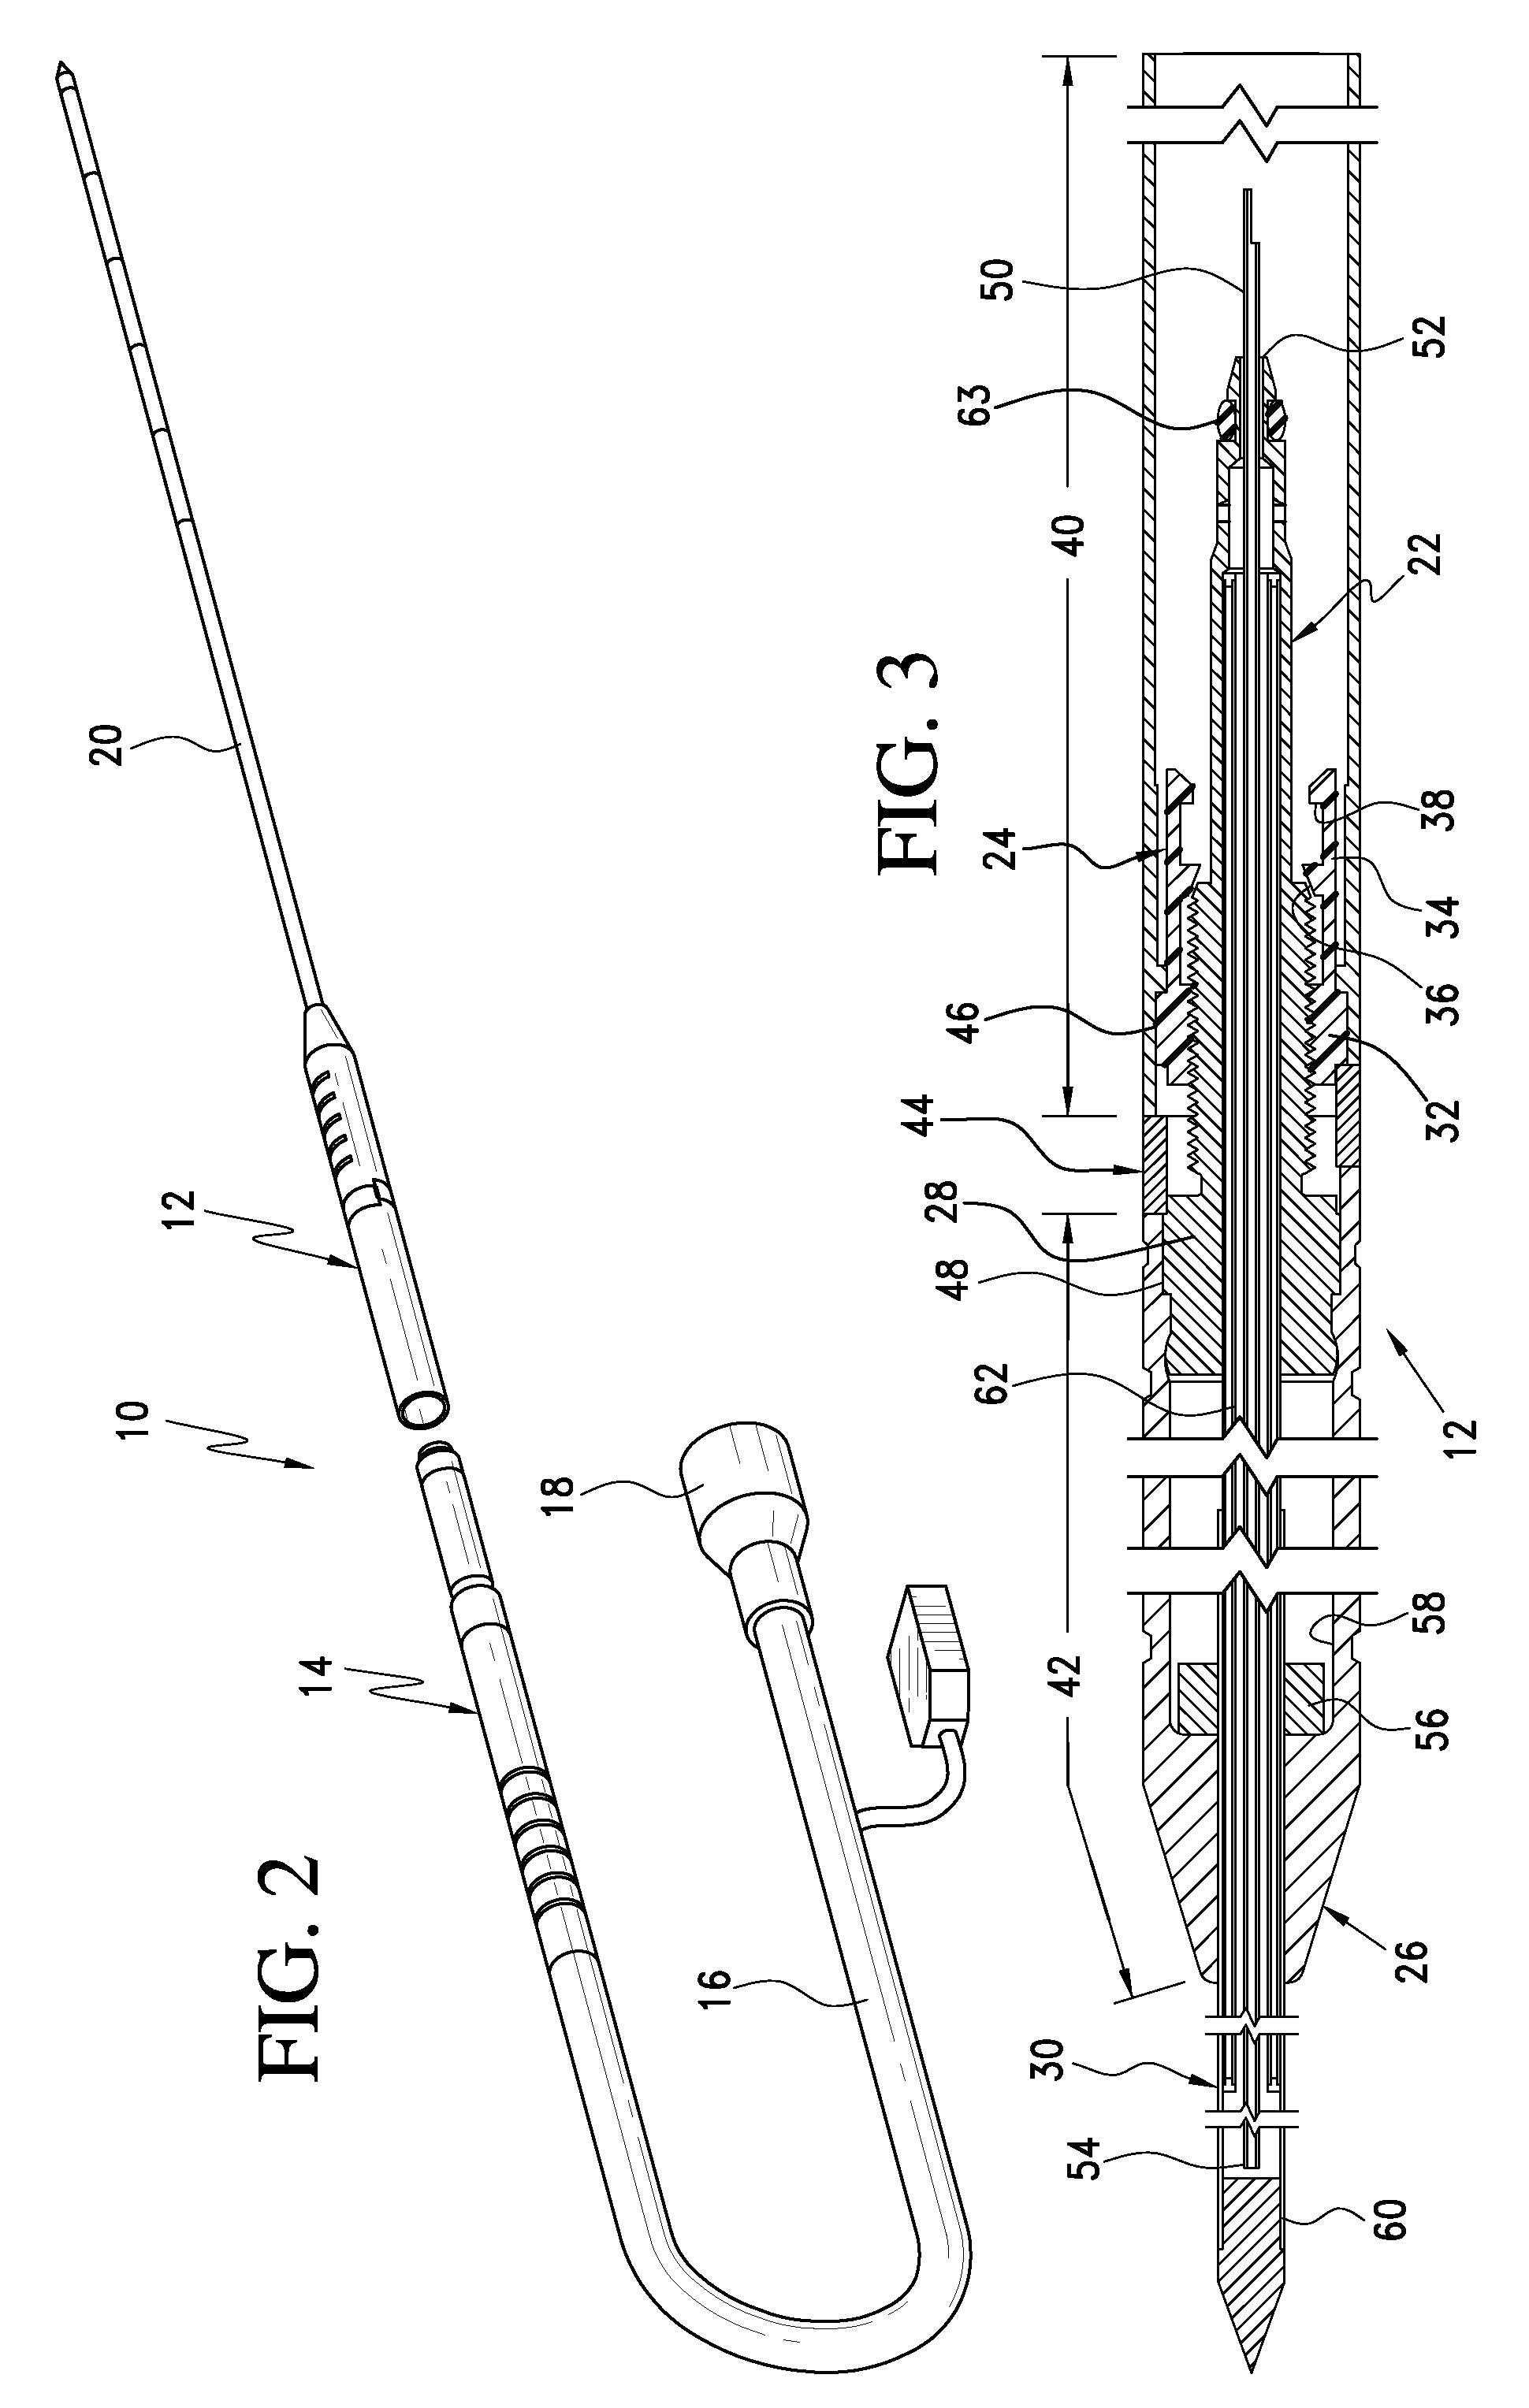 Cryosurgical probe with adjustable sliding apparatus